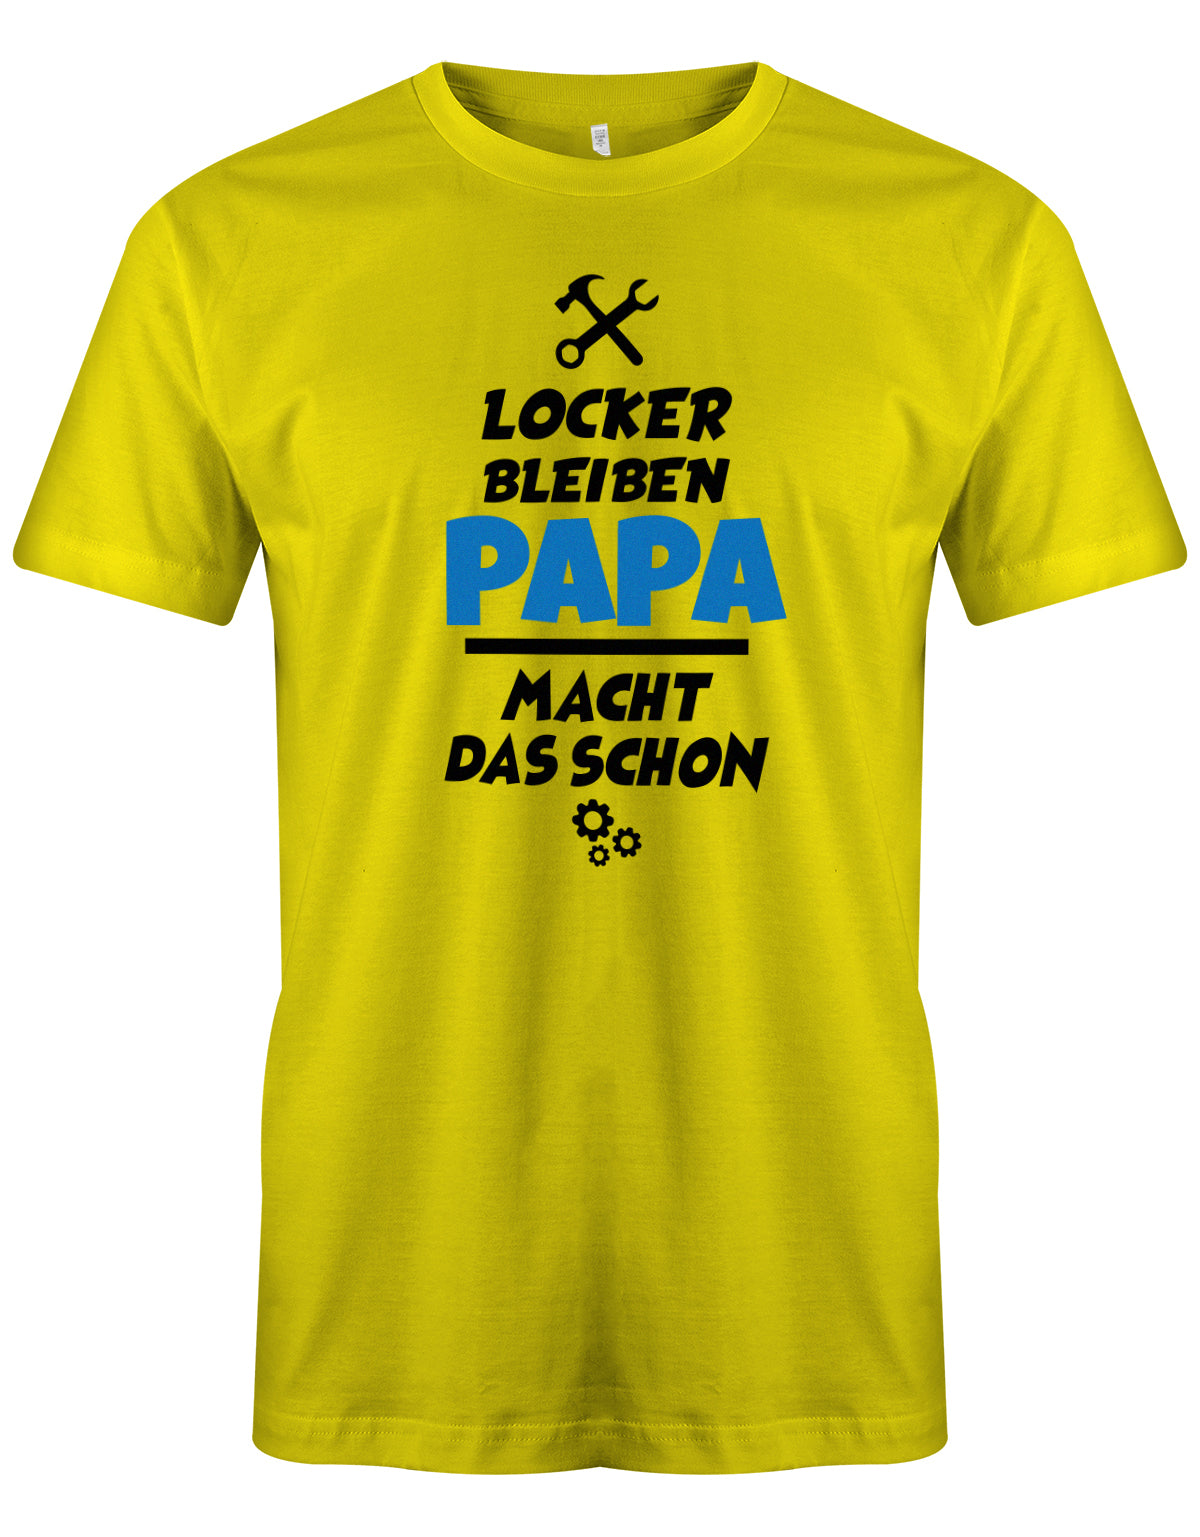 Papa T-Shirt - Locker bleiben Papa macht das schon Gelb